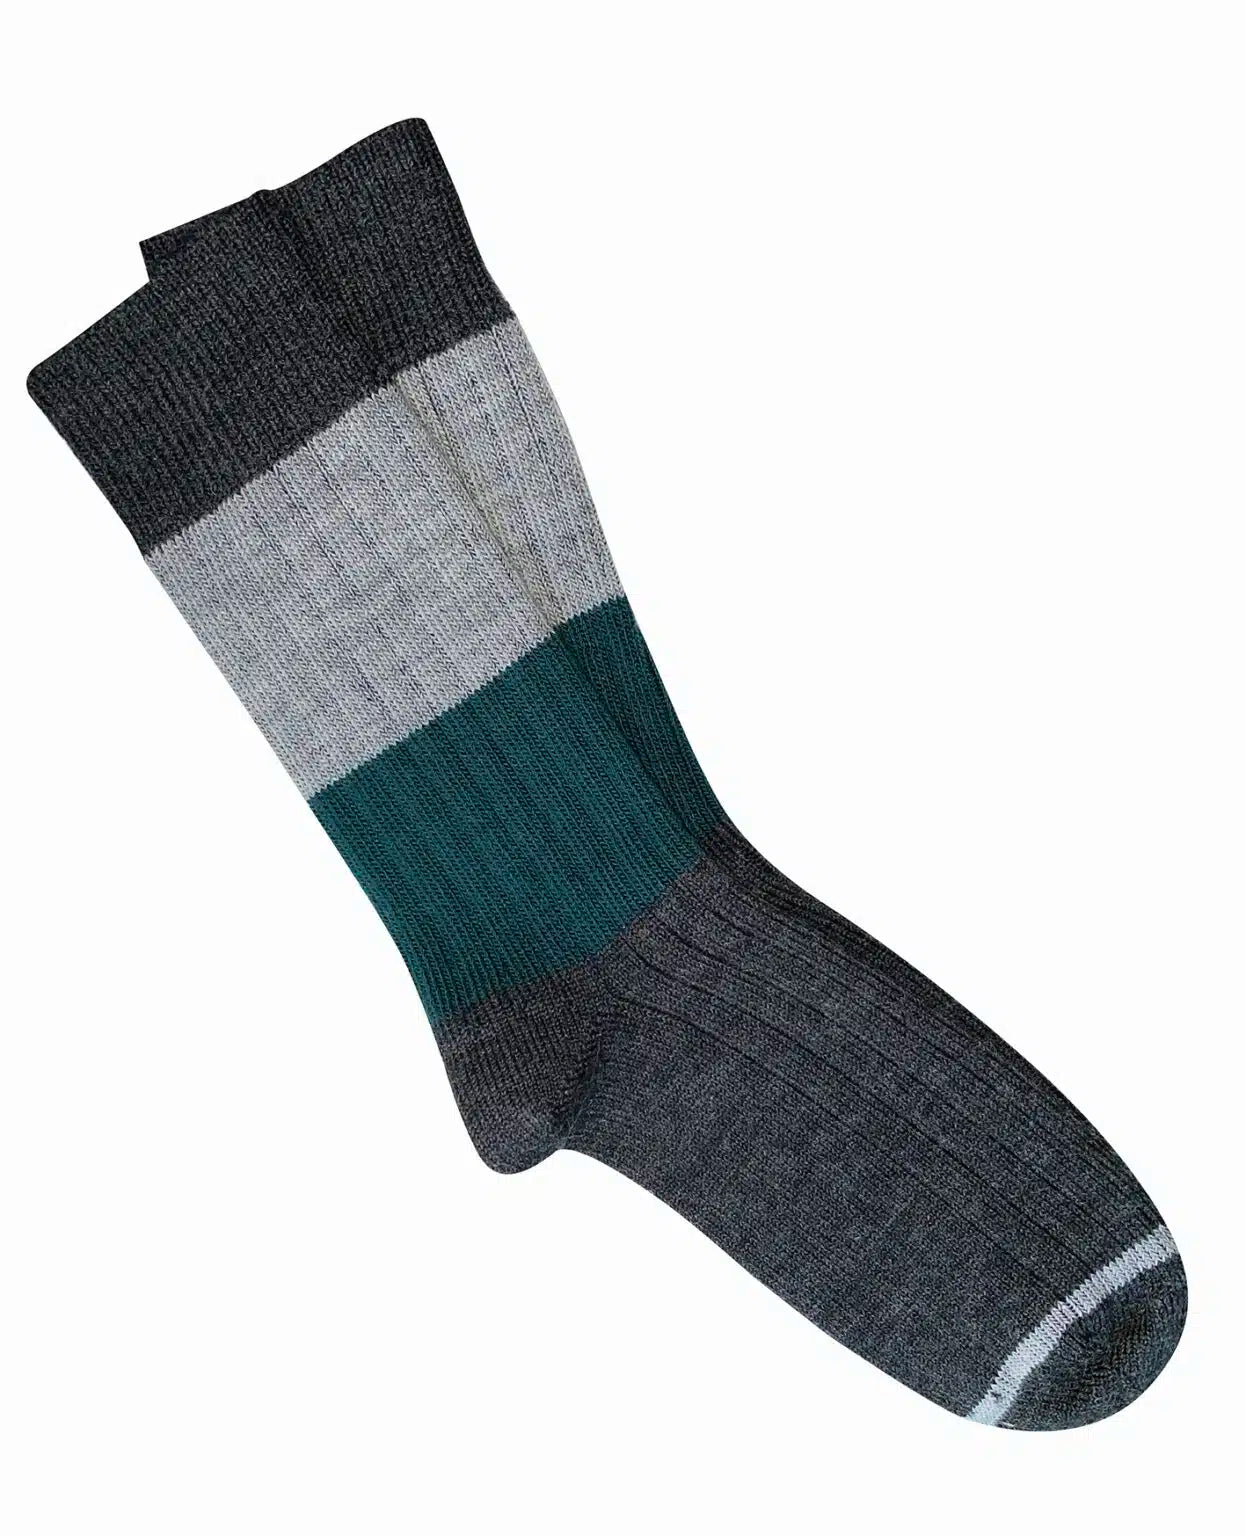 Tightology Chunky Rib Merino Wool Socks in Charcoal Stripe